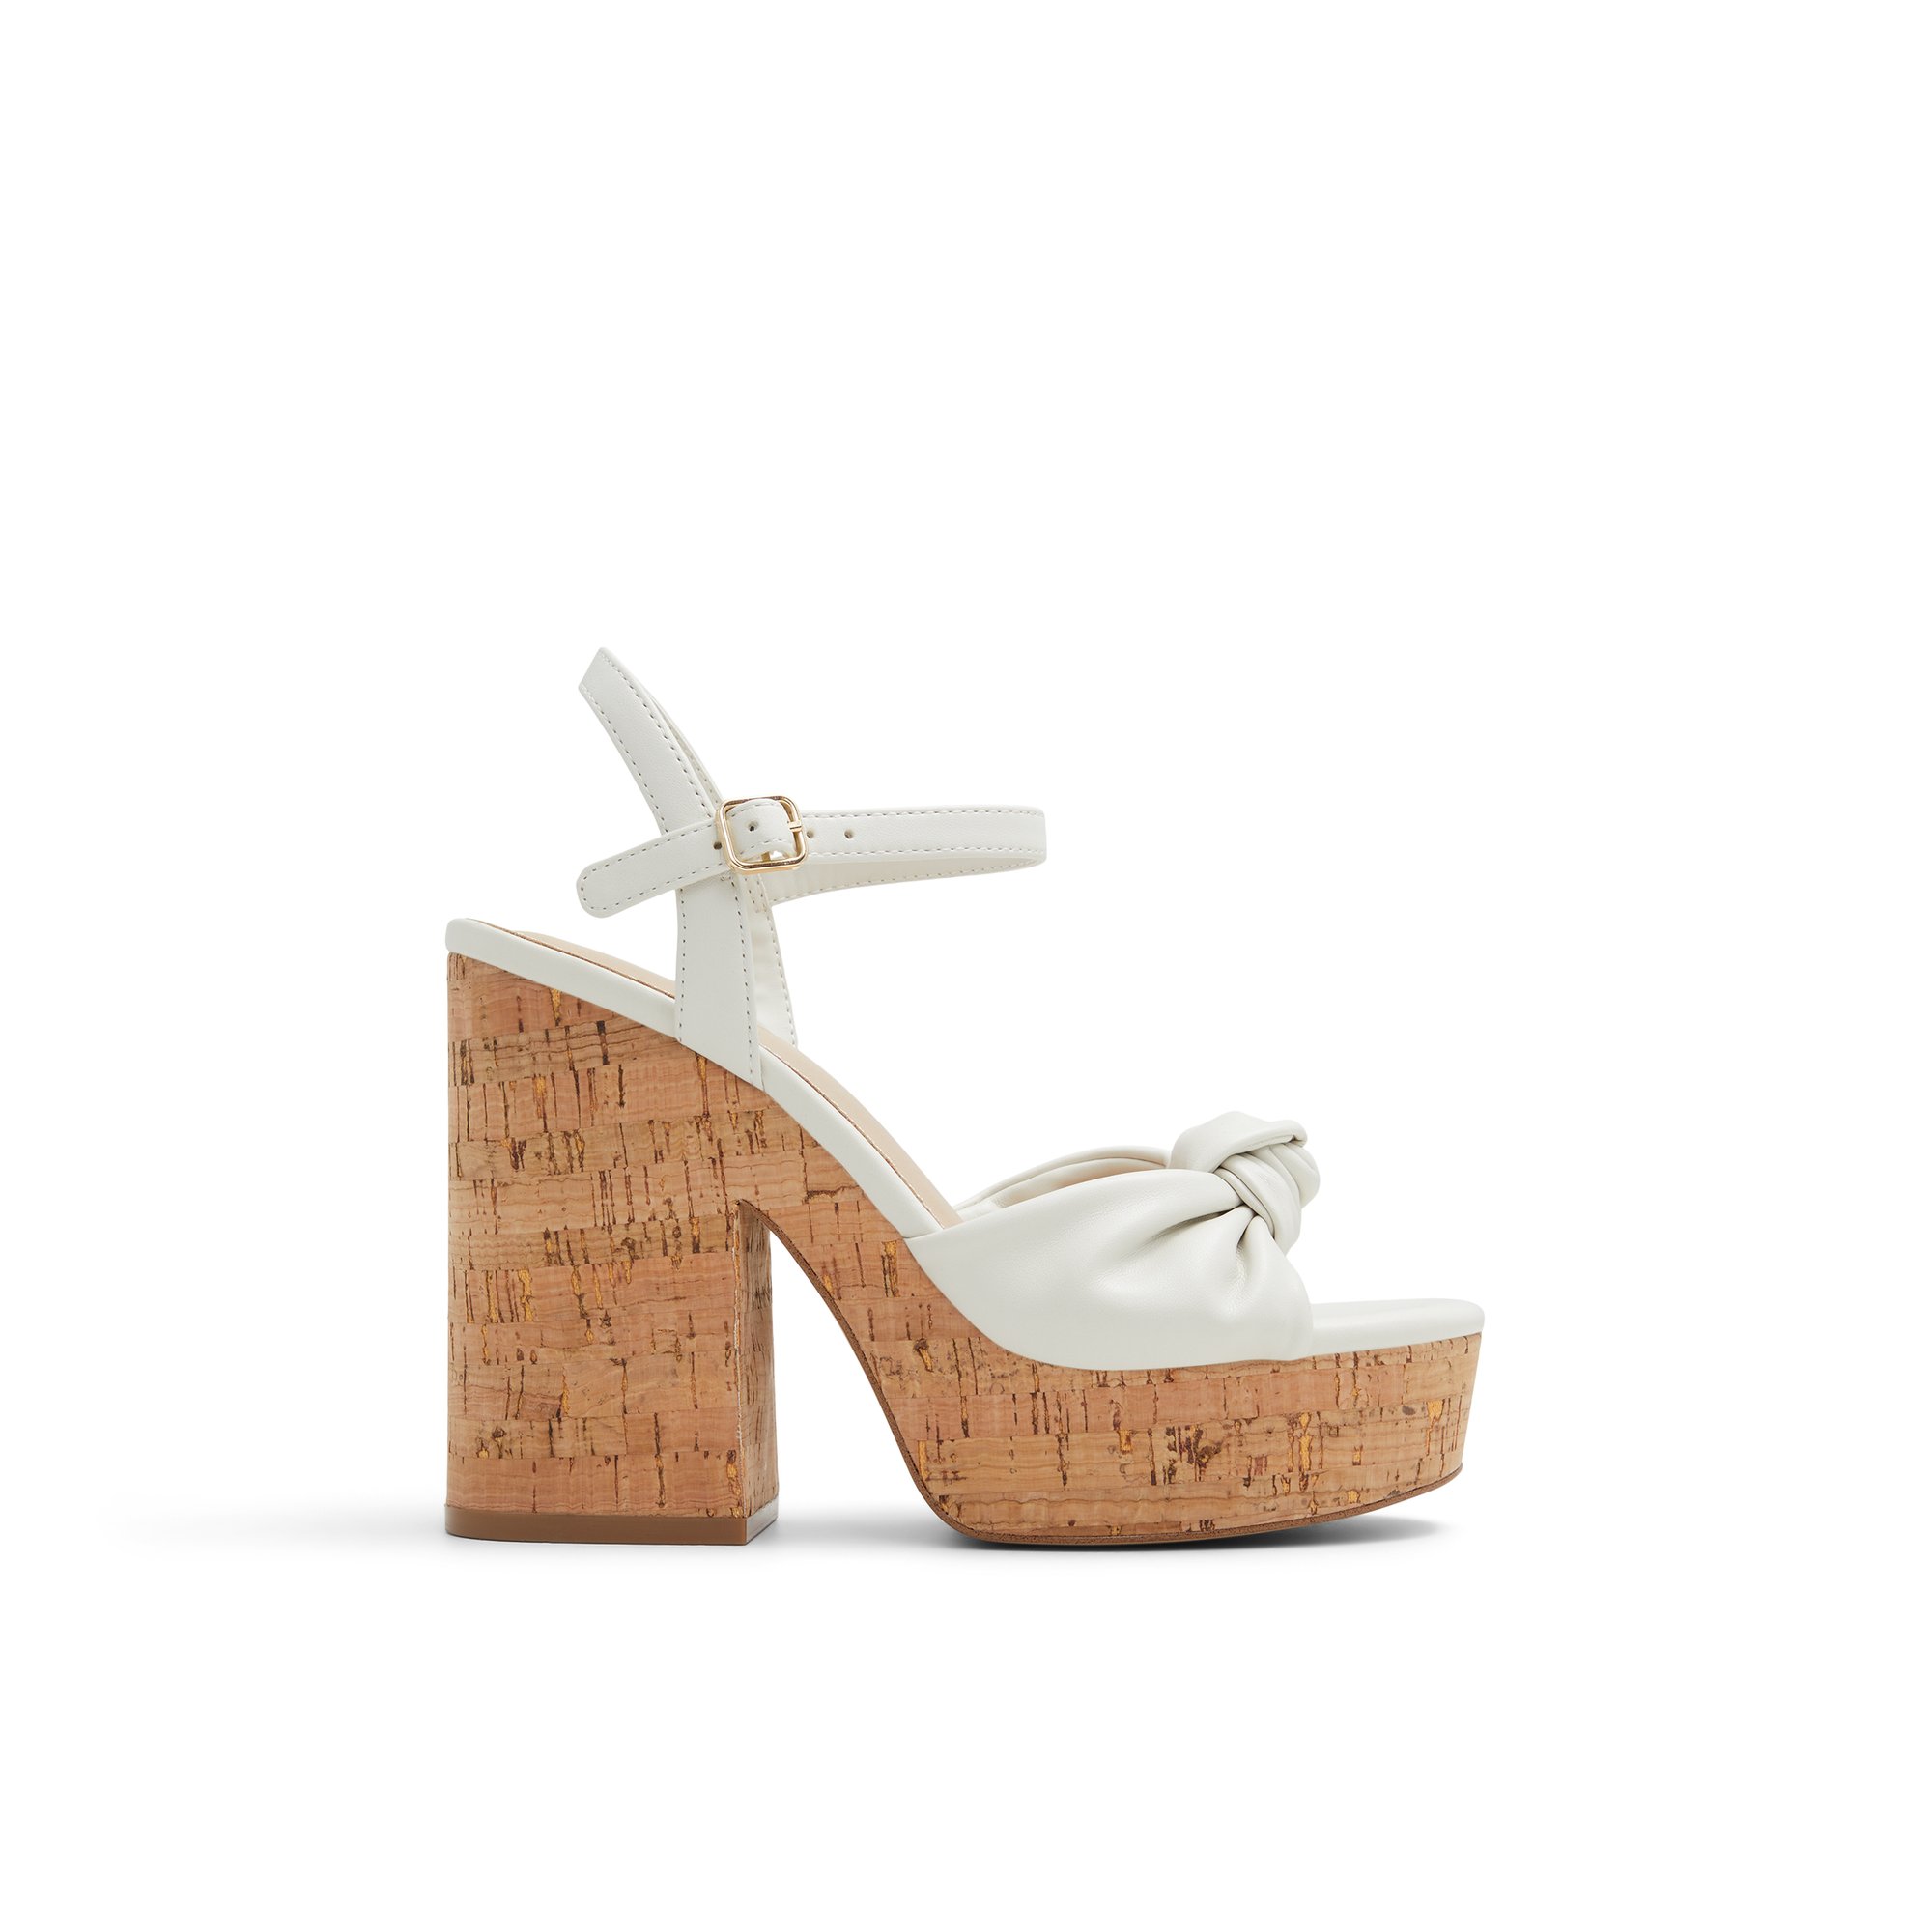 ALDO Ulialdan - Women's Platform Sandal Sandals - White